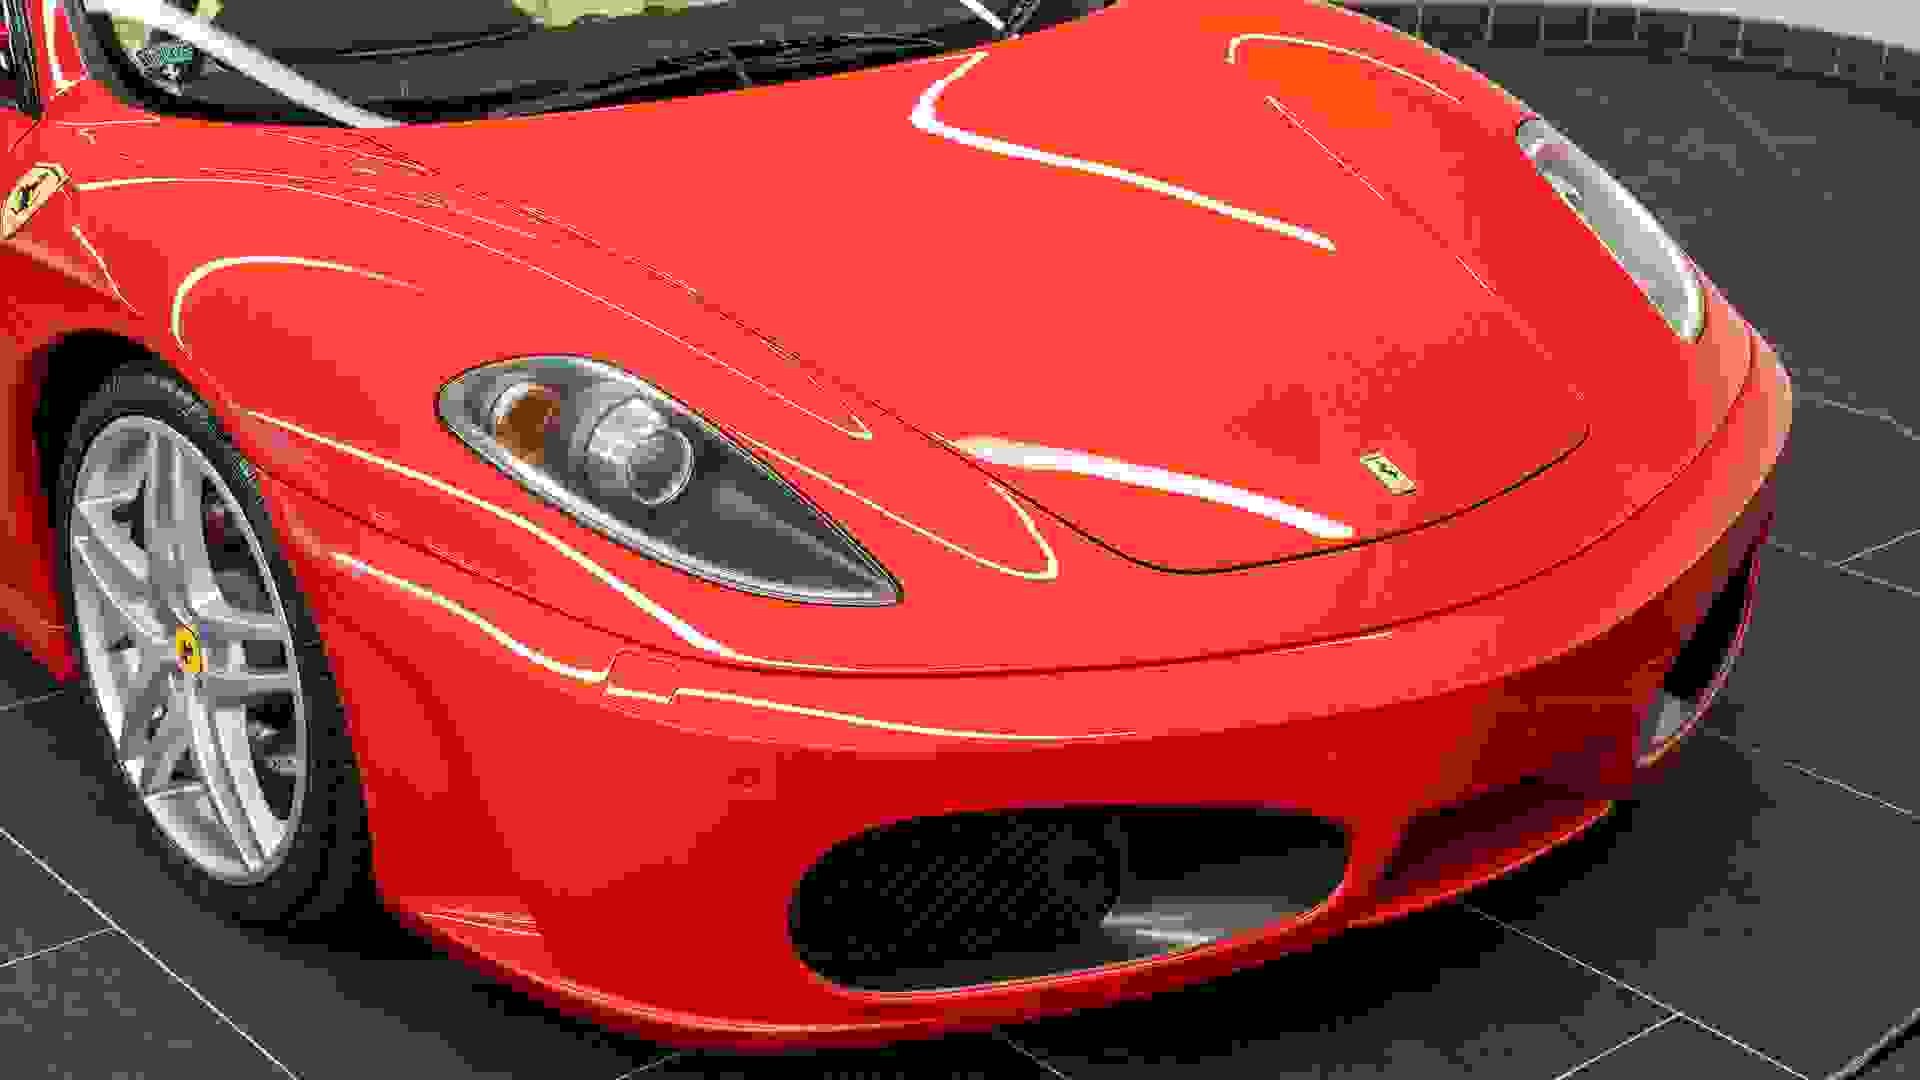 Ferrari F430 Photo e1bfdbdf-57b7-4cb8-a287-4fd9ec9fb041.jpg